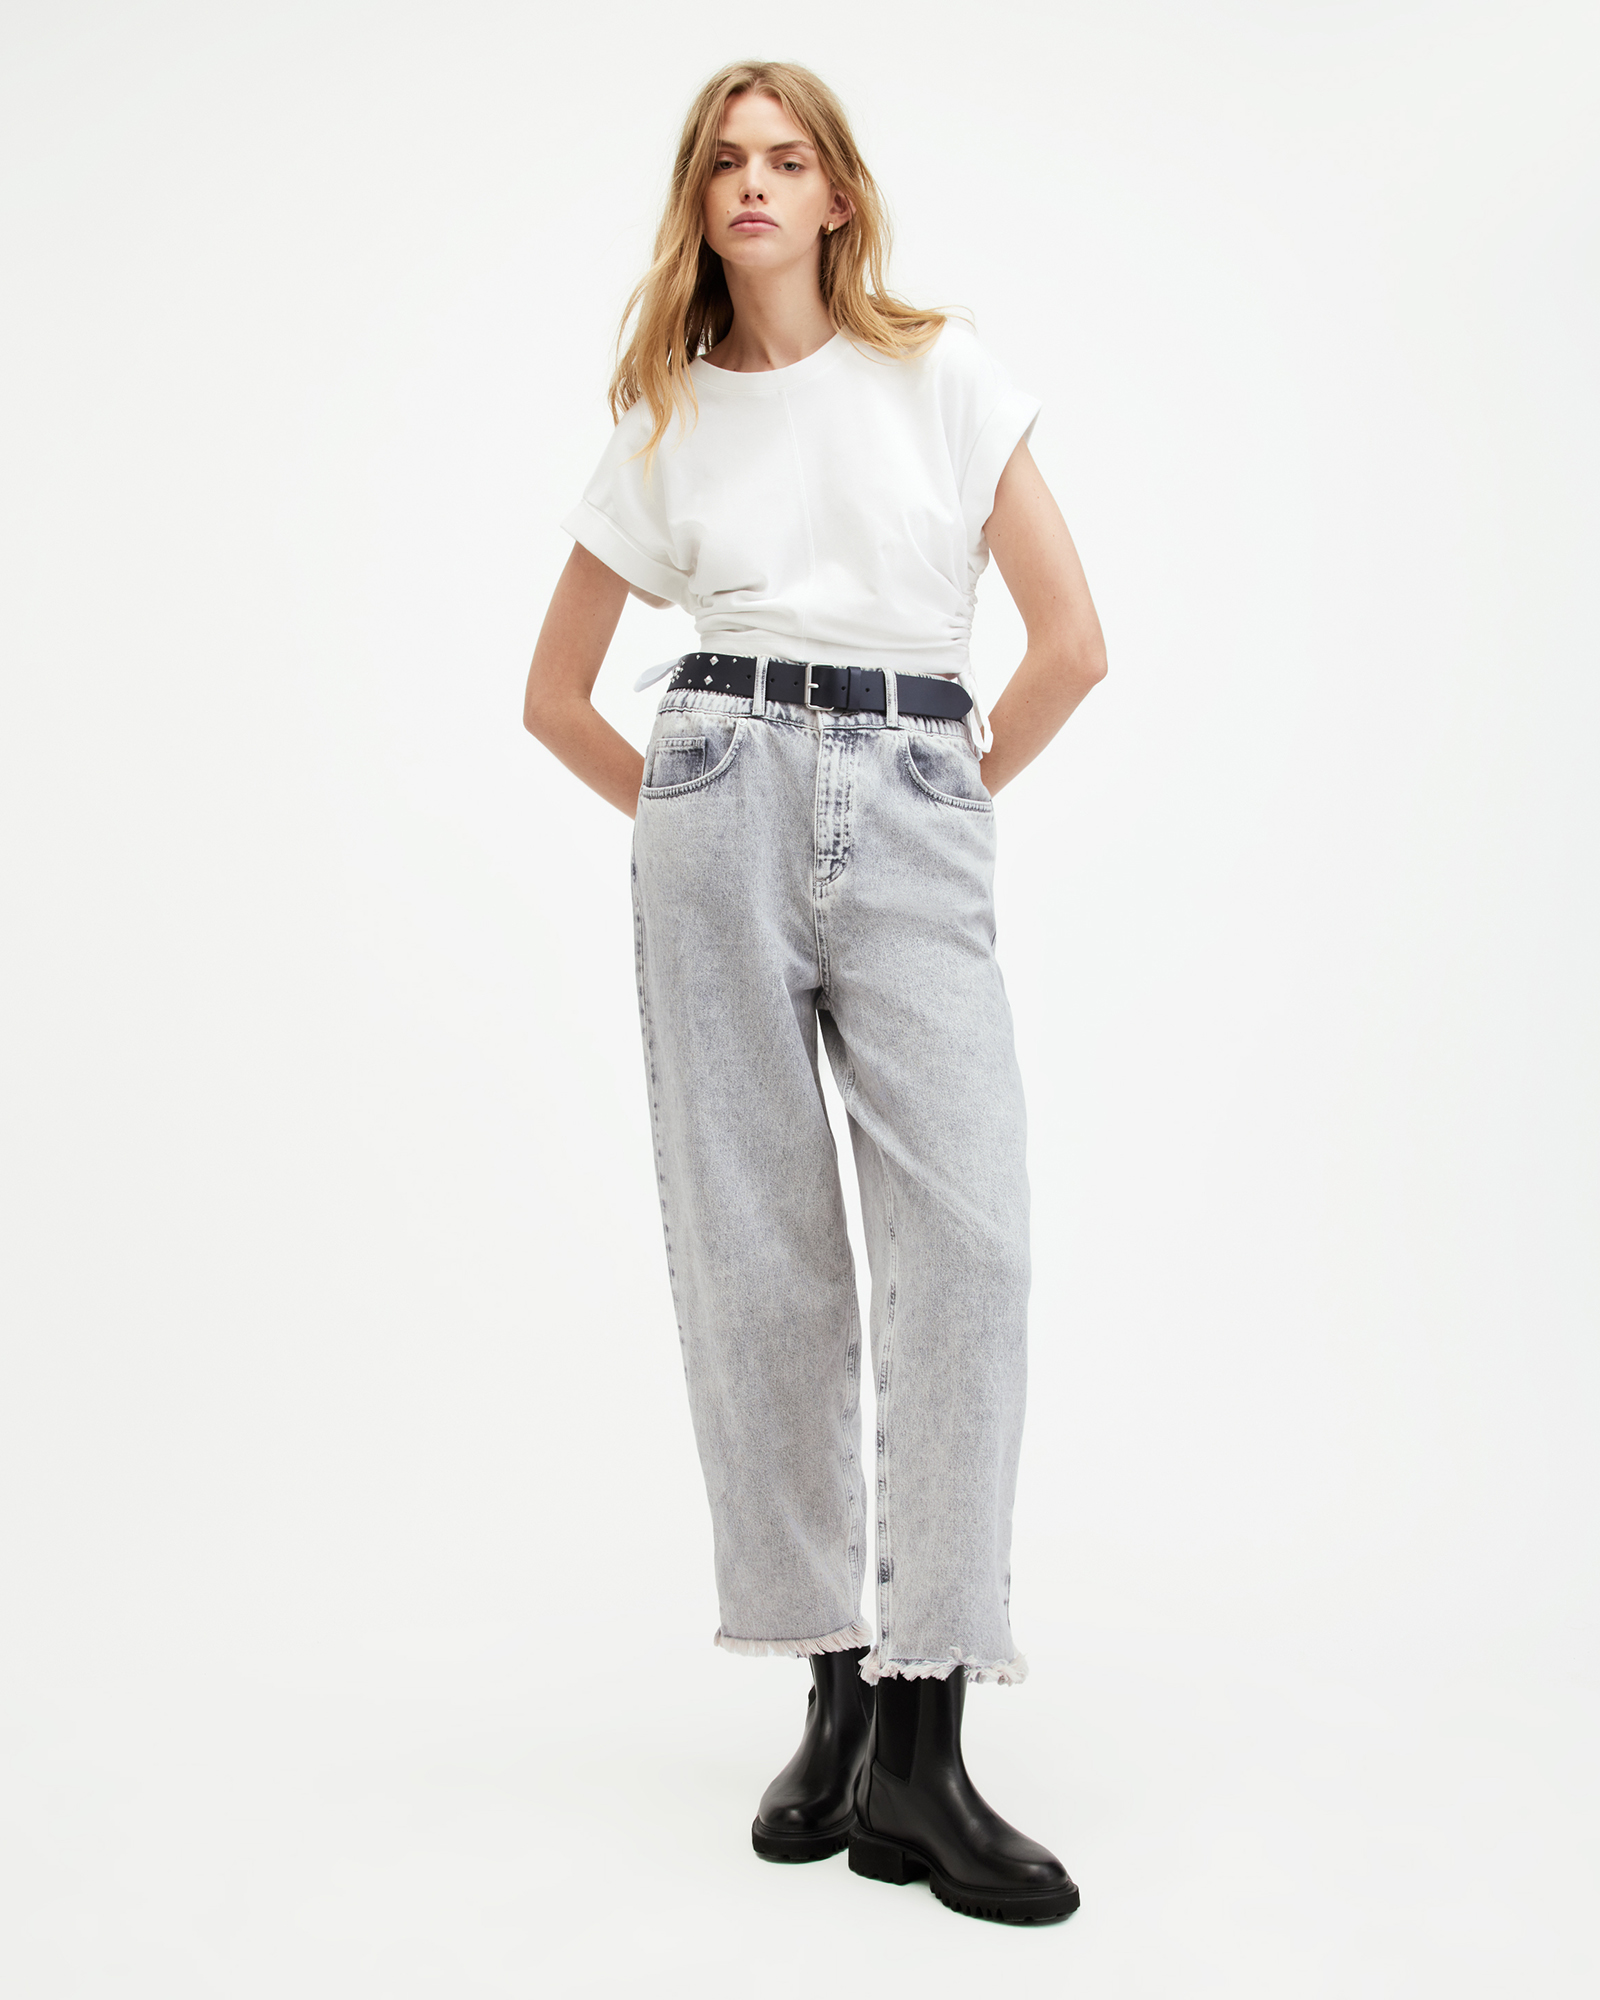 AllSaints Hailey Frayed Hem Denim Jeans,, SNOW GREY, Size: UK